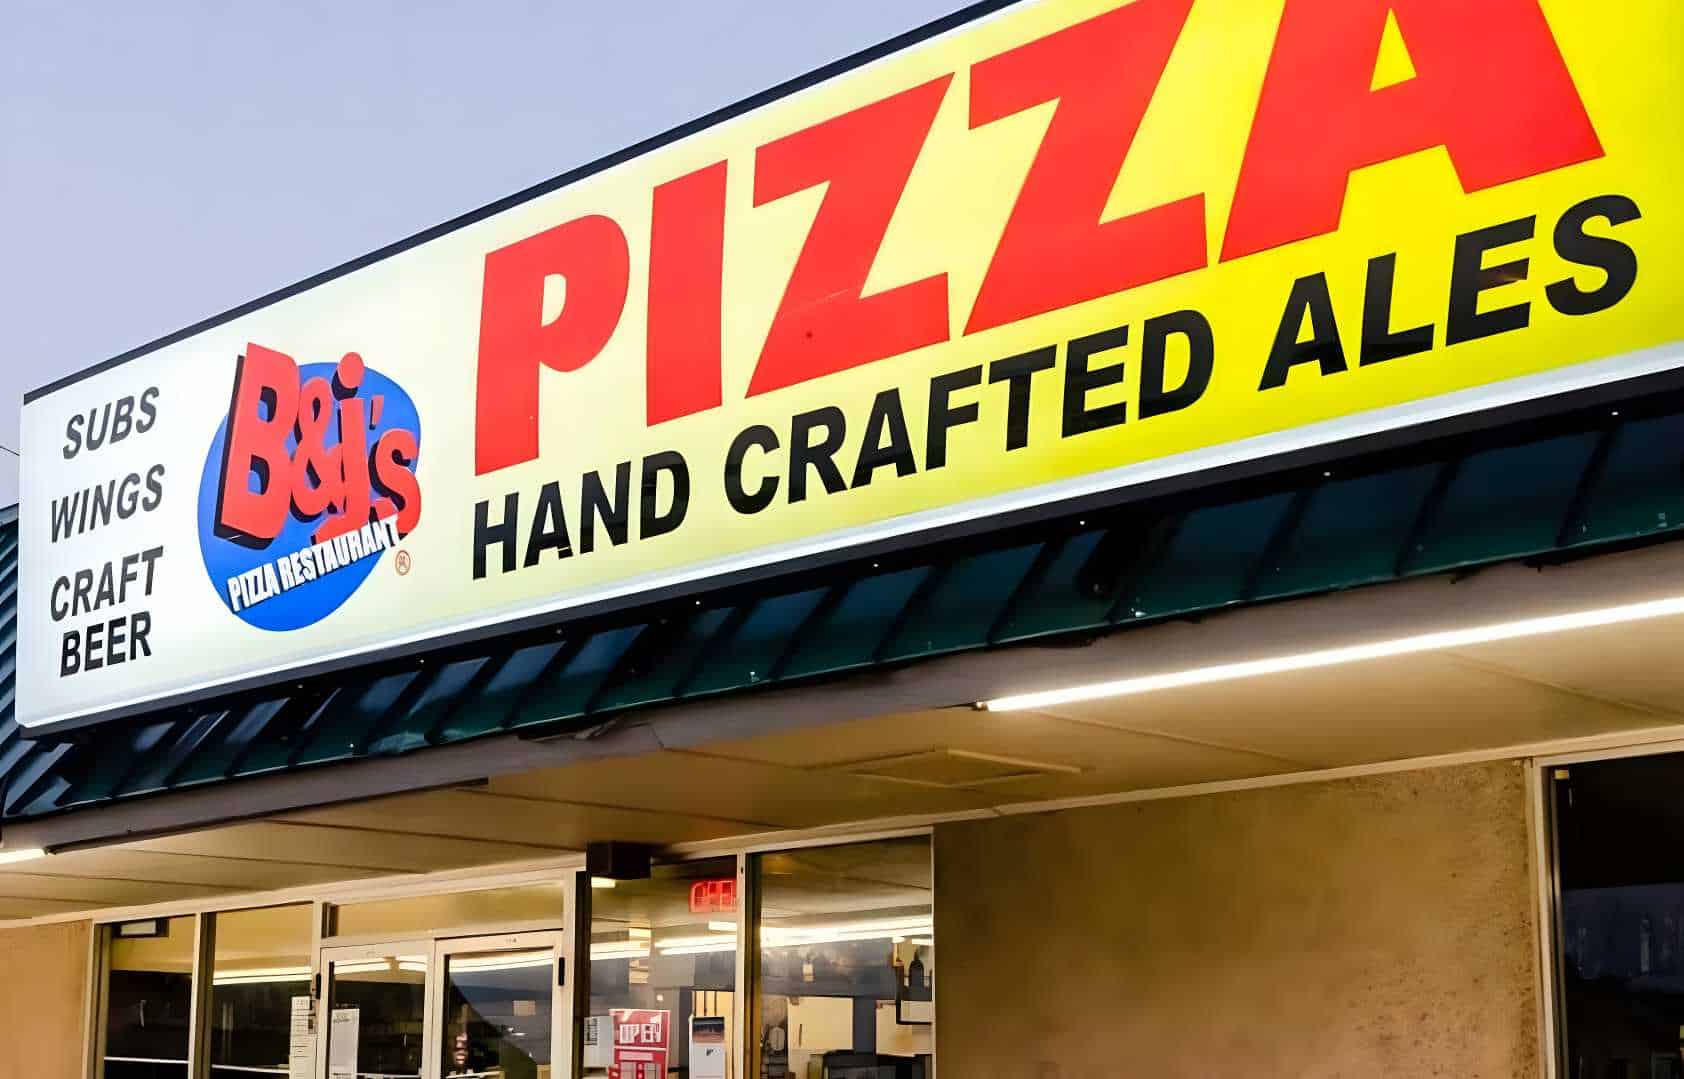 B&J’s Pizza – The Original Best Restaurants in Corpus Christi, TX